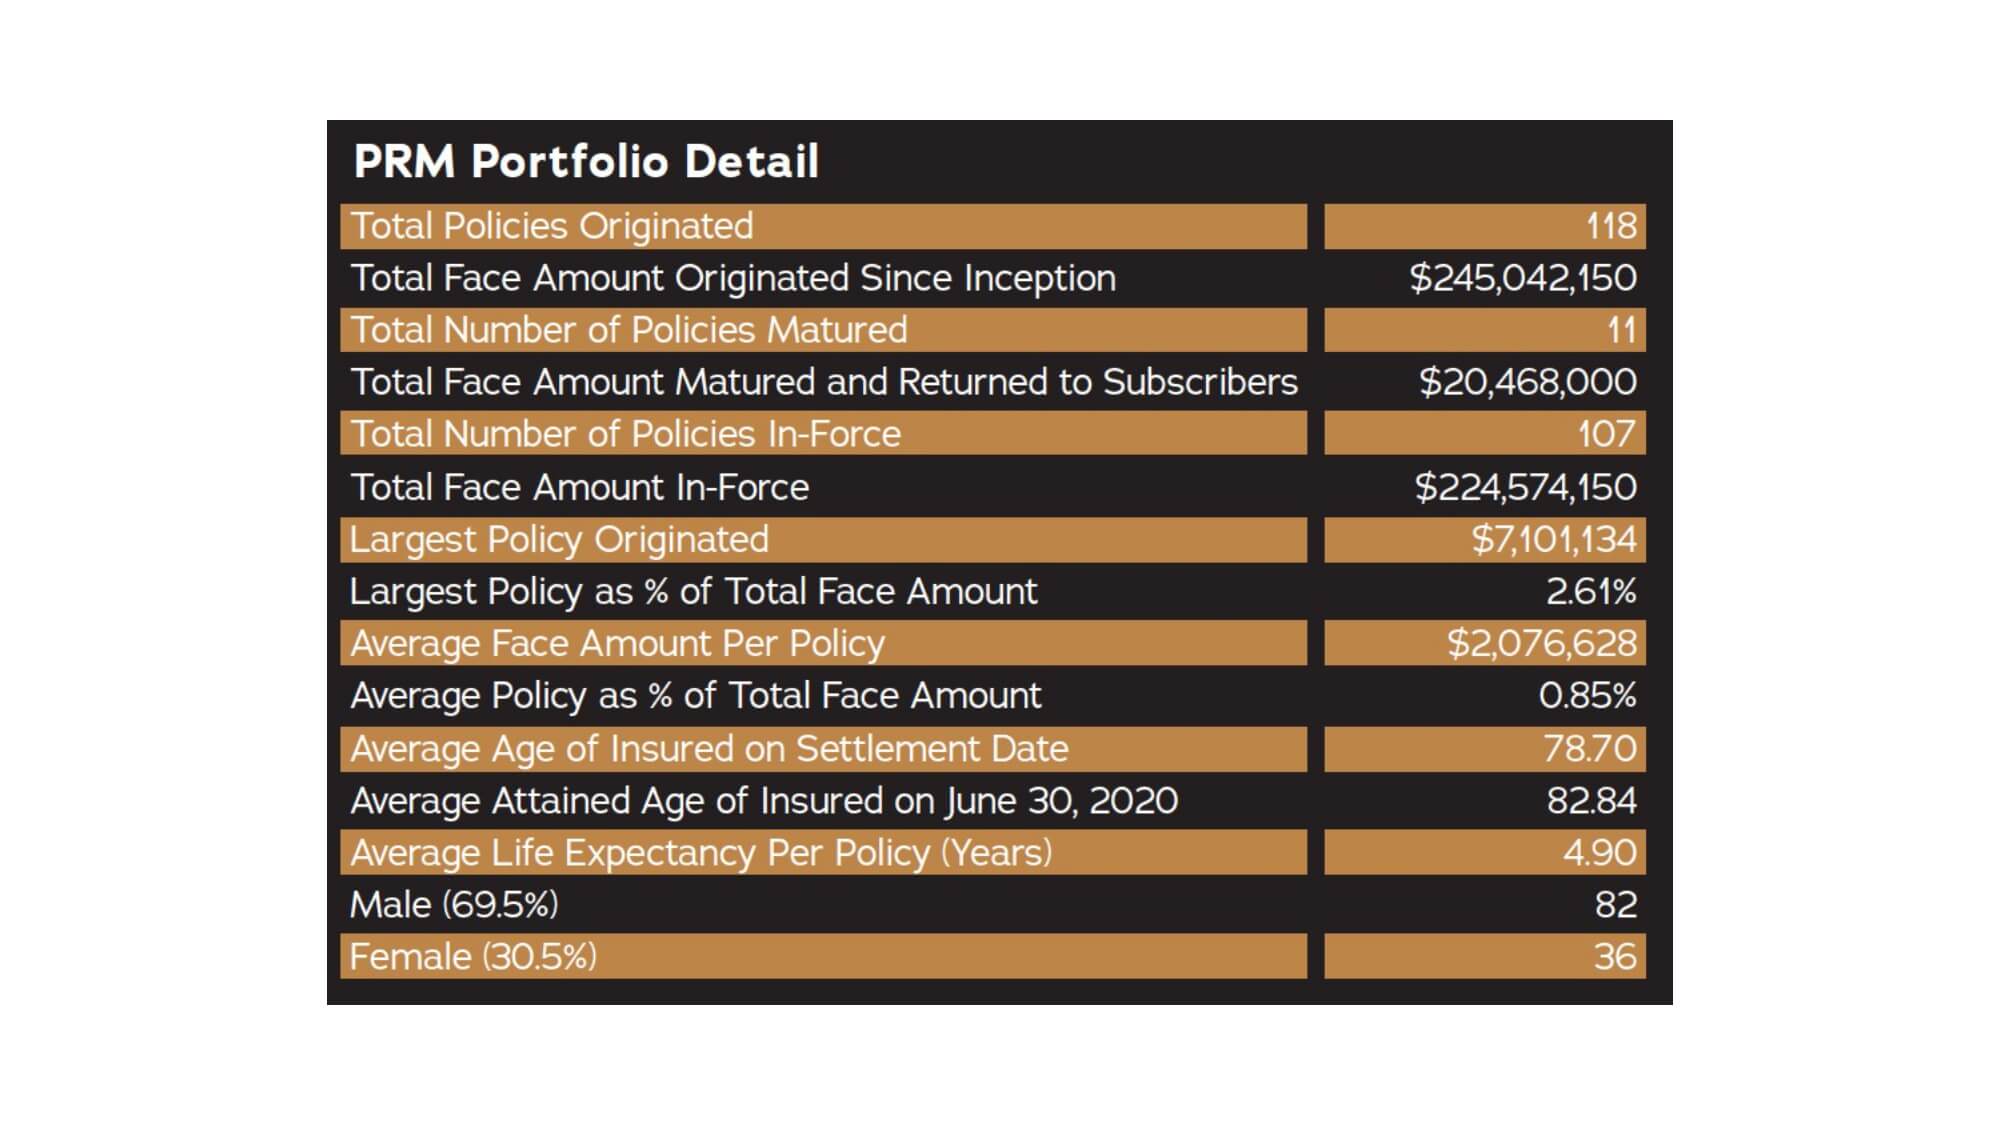 CAS - Marketing - PRM Portfolio Detail Infographic - 20210526_page-0001